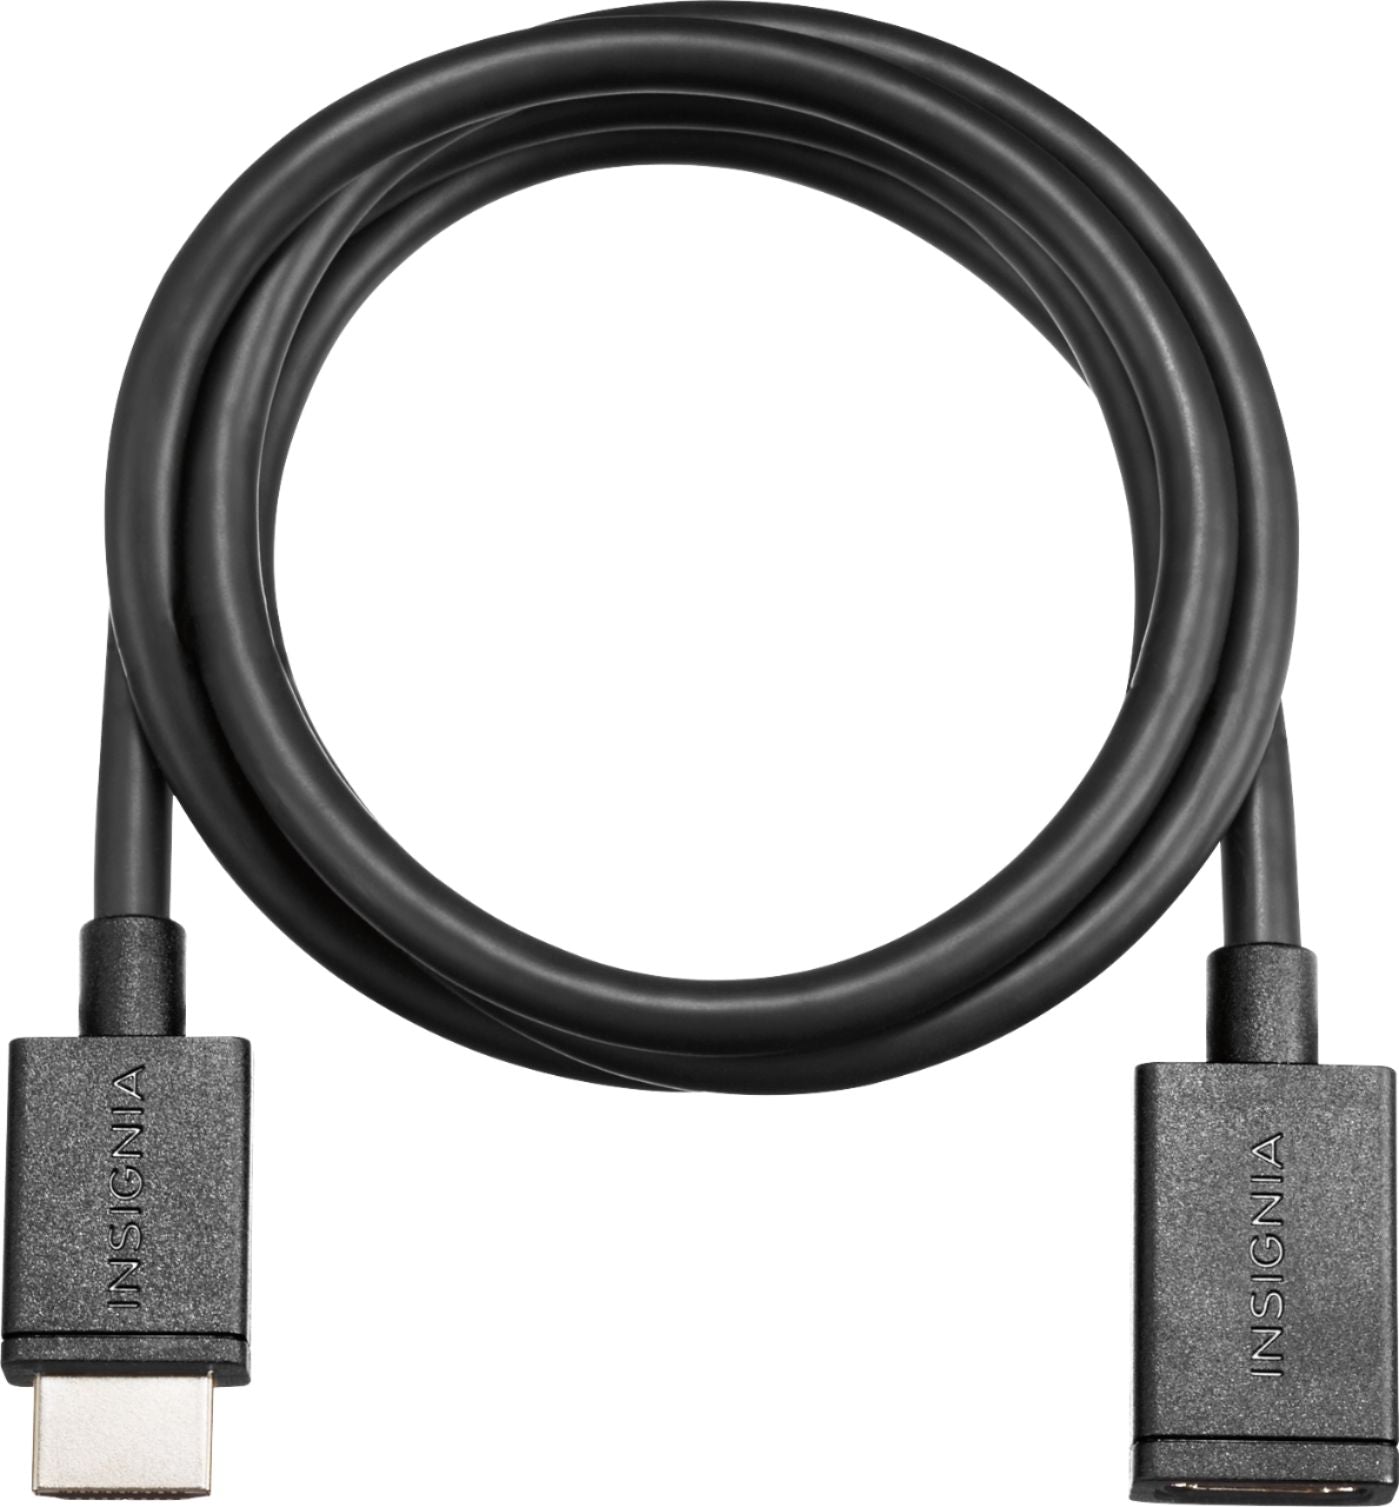 Insignia - 3' HDMI Cable Extender - Rekes Sales